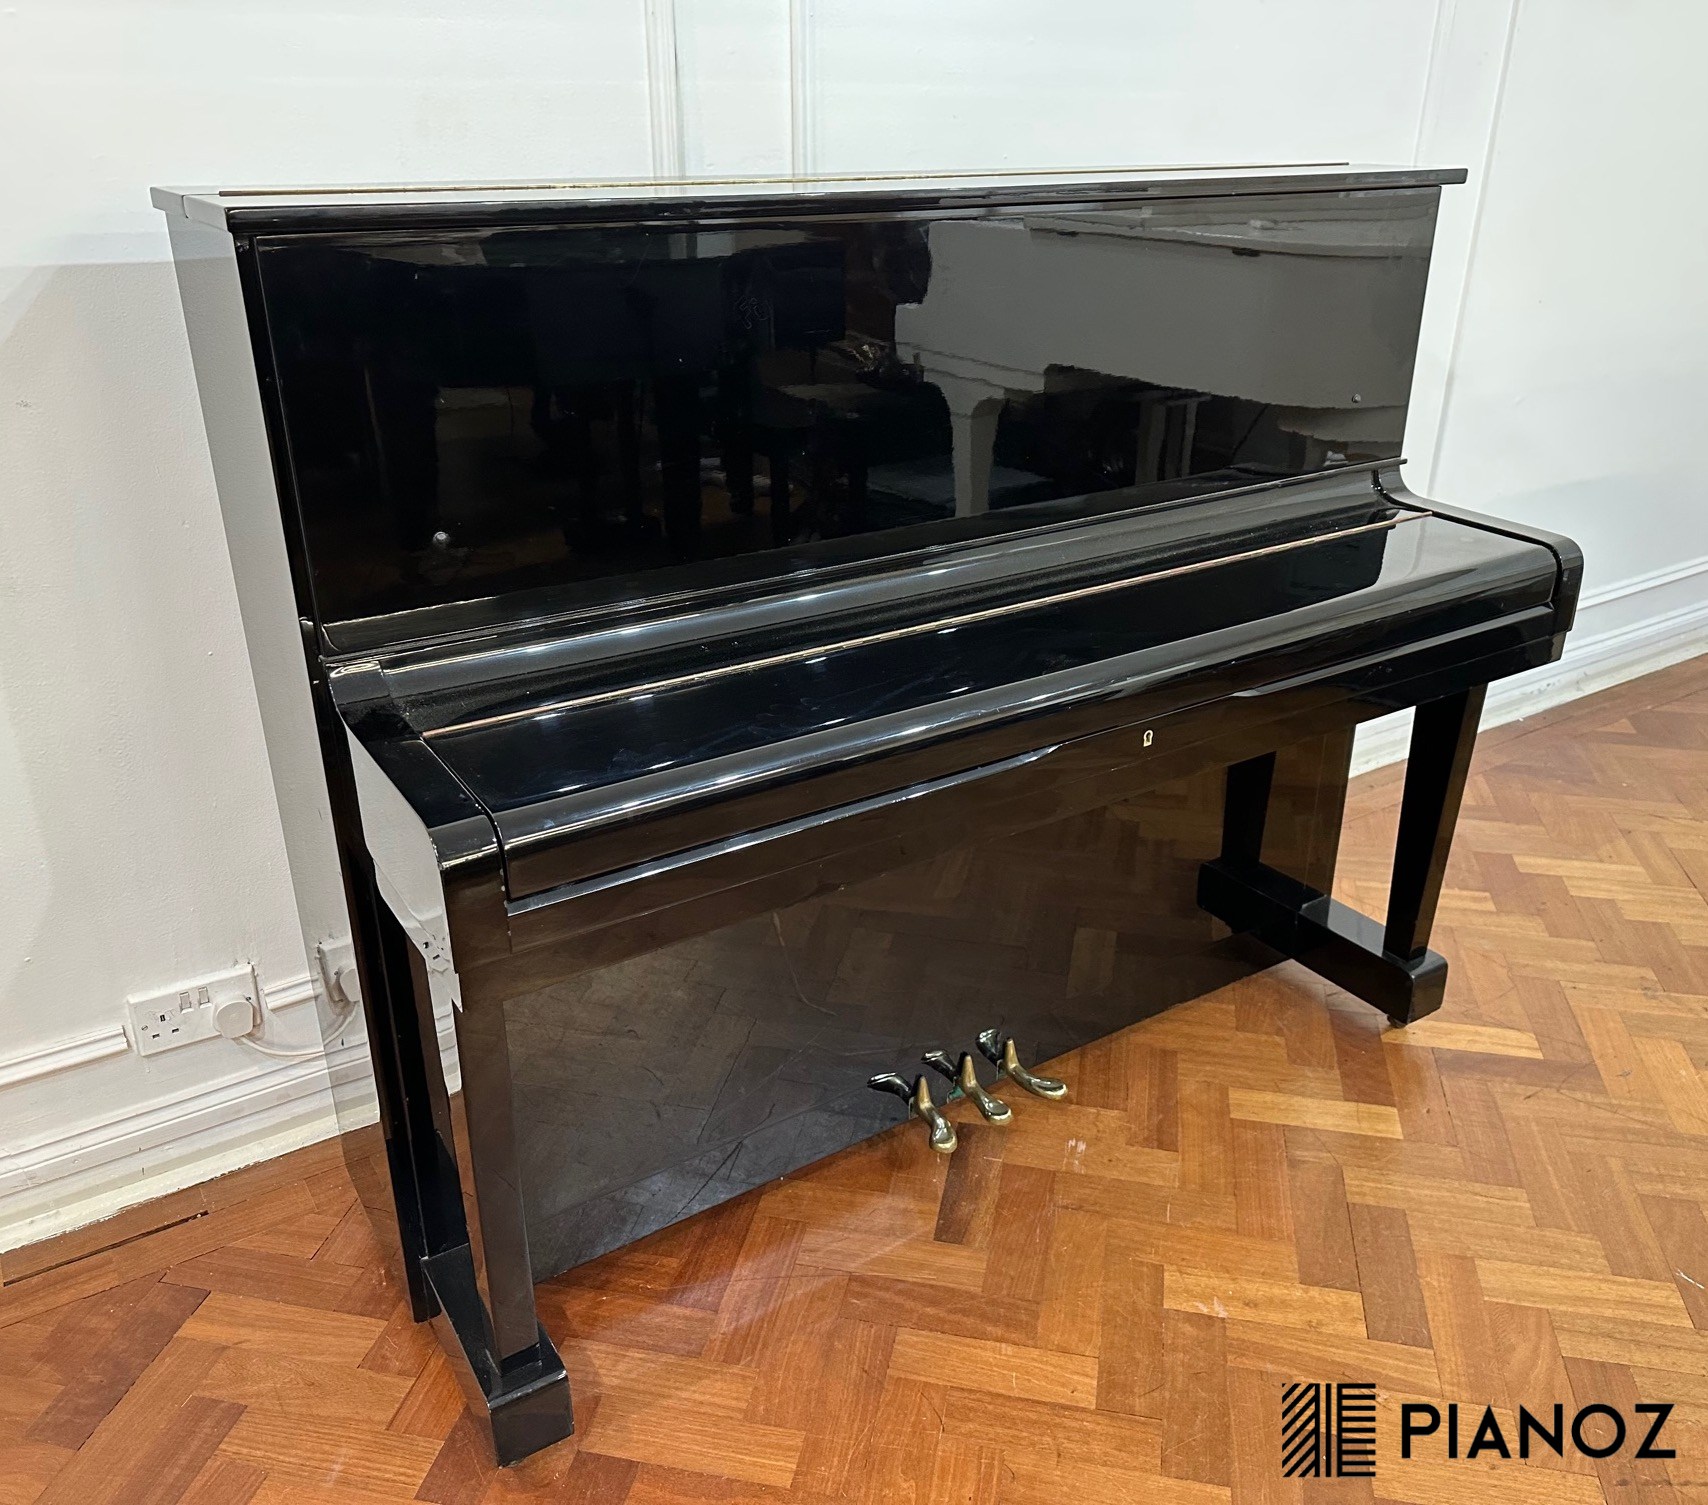 Samick WG5 U1 Size Upright Piano piano for sale in UK